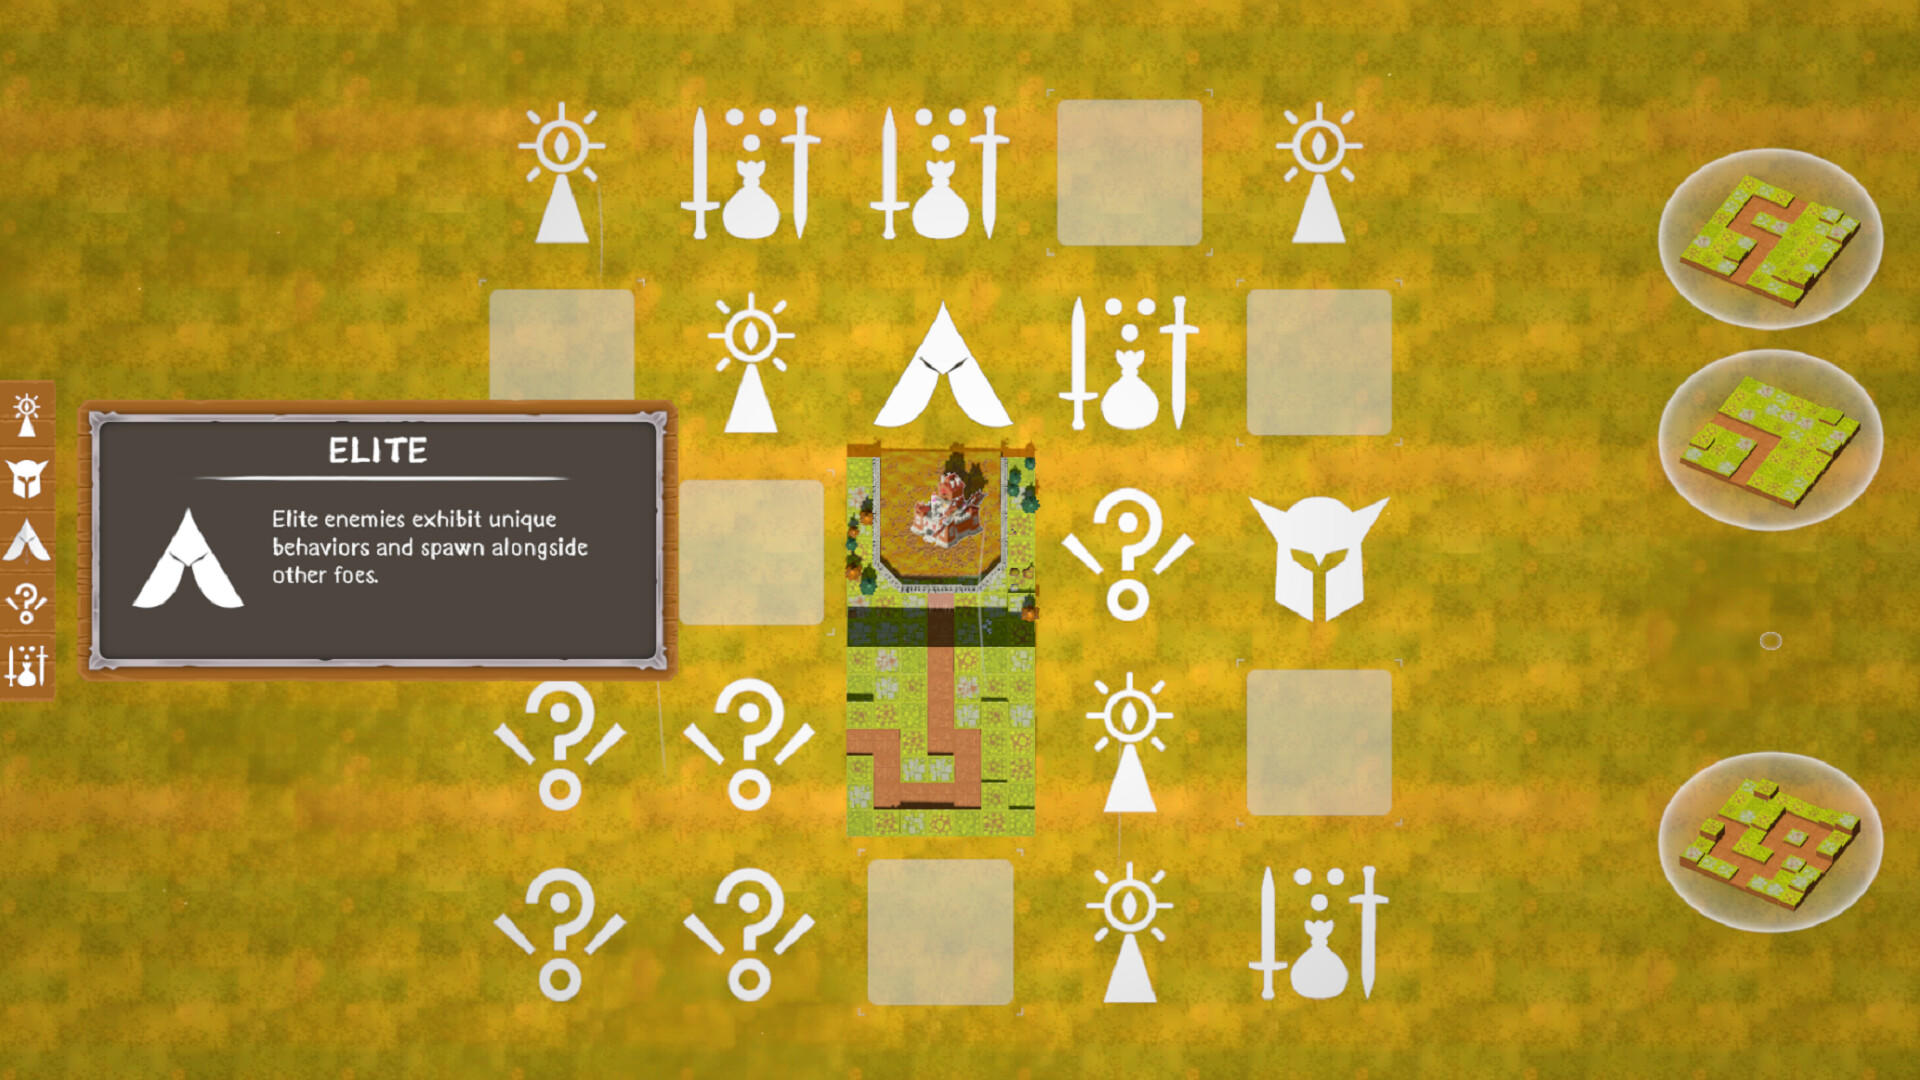 Deckfort Alchemist screenshot game